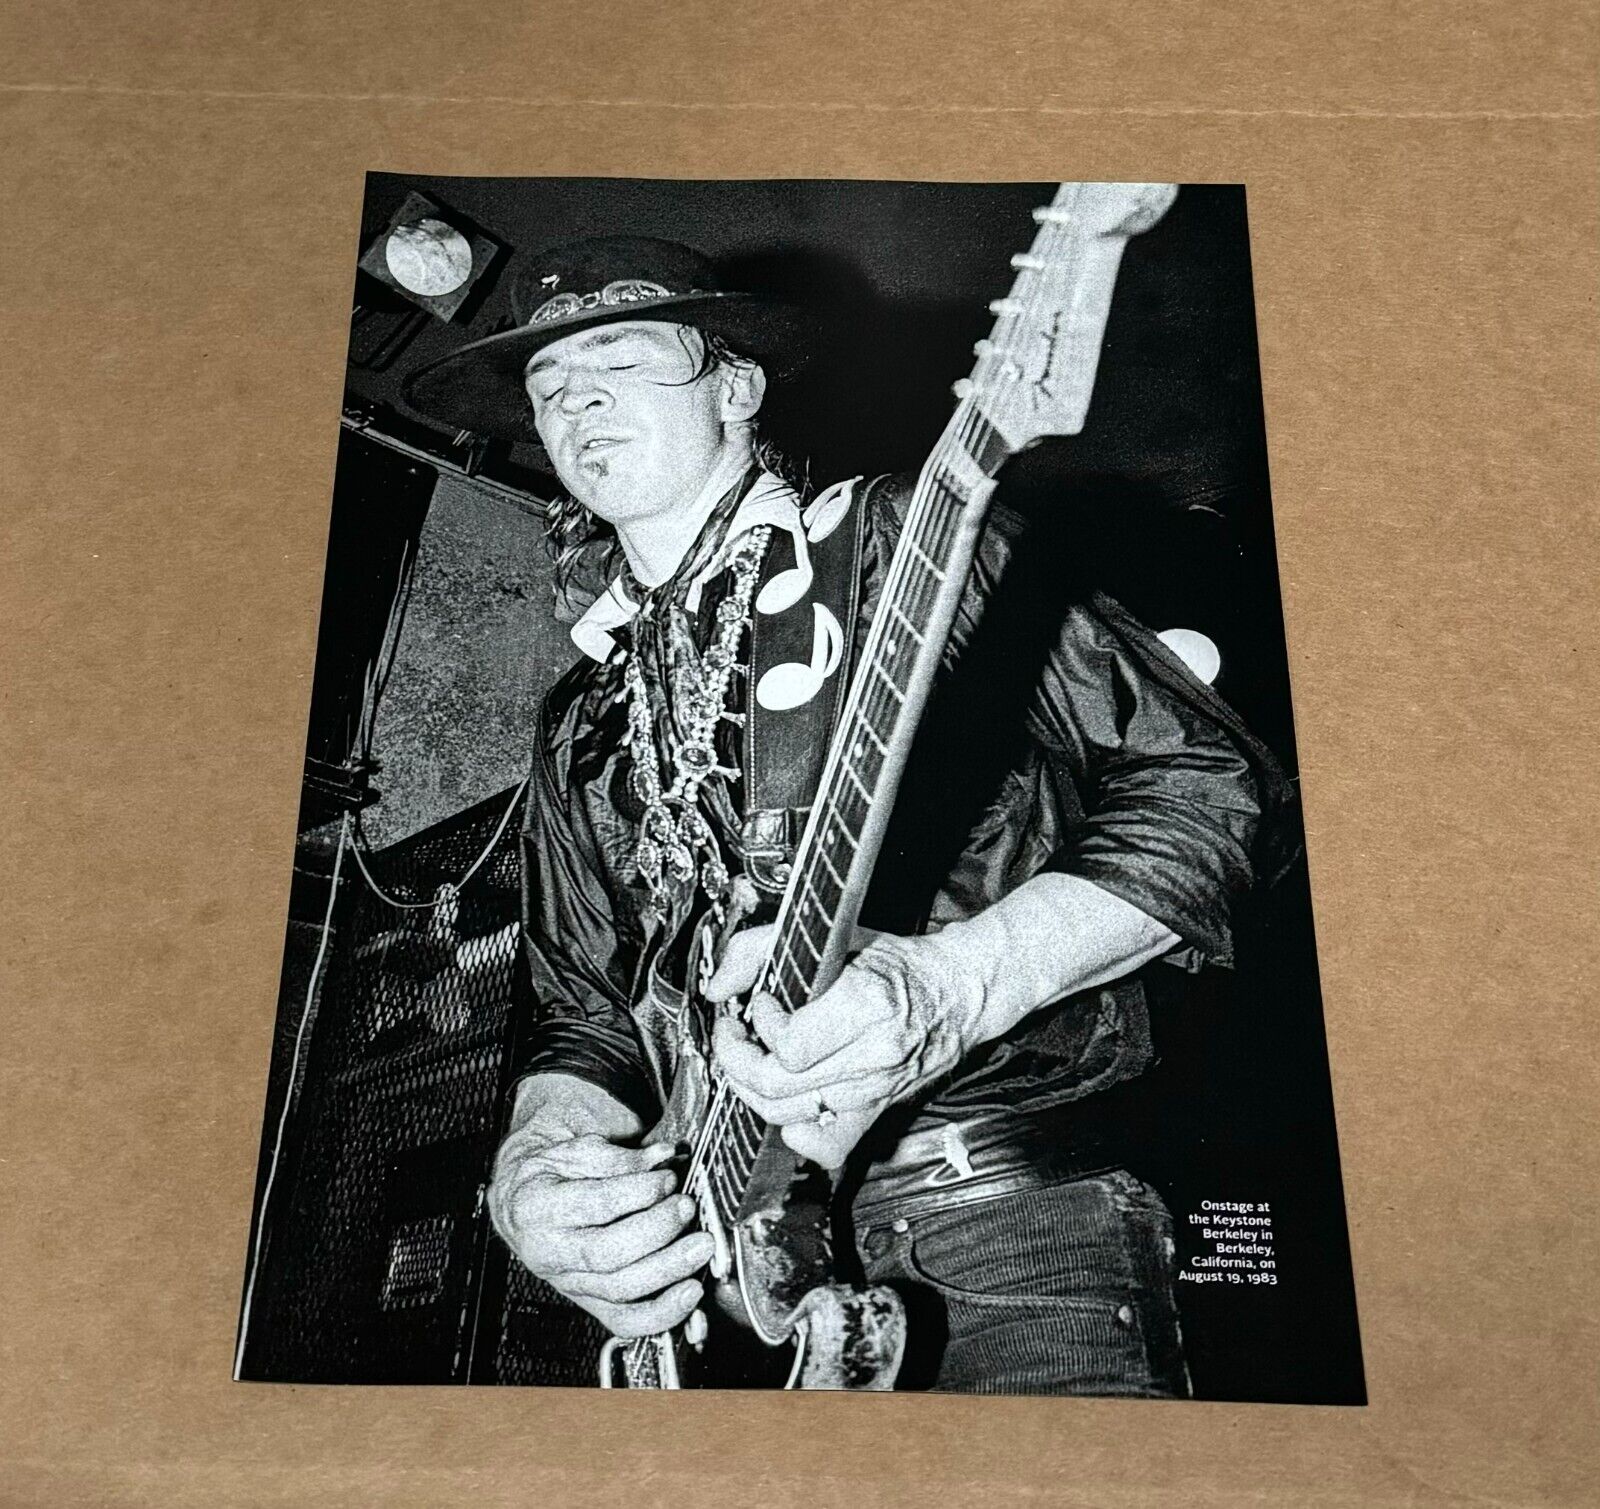 Stevie Ray Vaughan in Berkley CA 1983 - SRV - Music Print Ad Photo - 2013